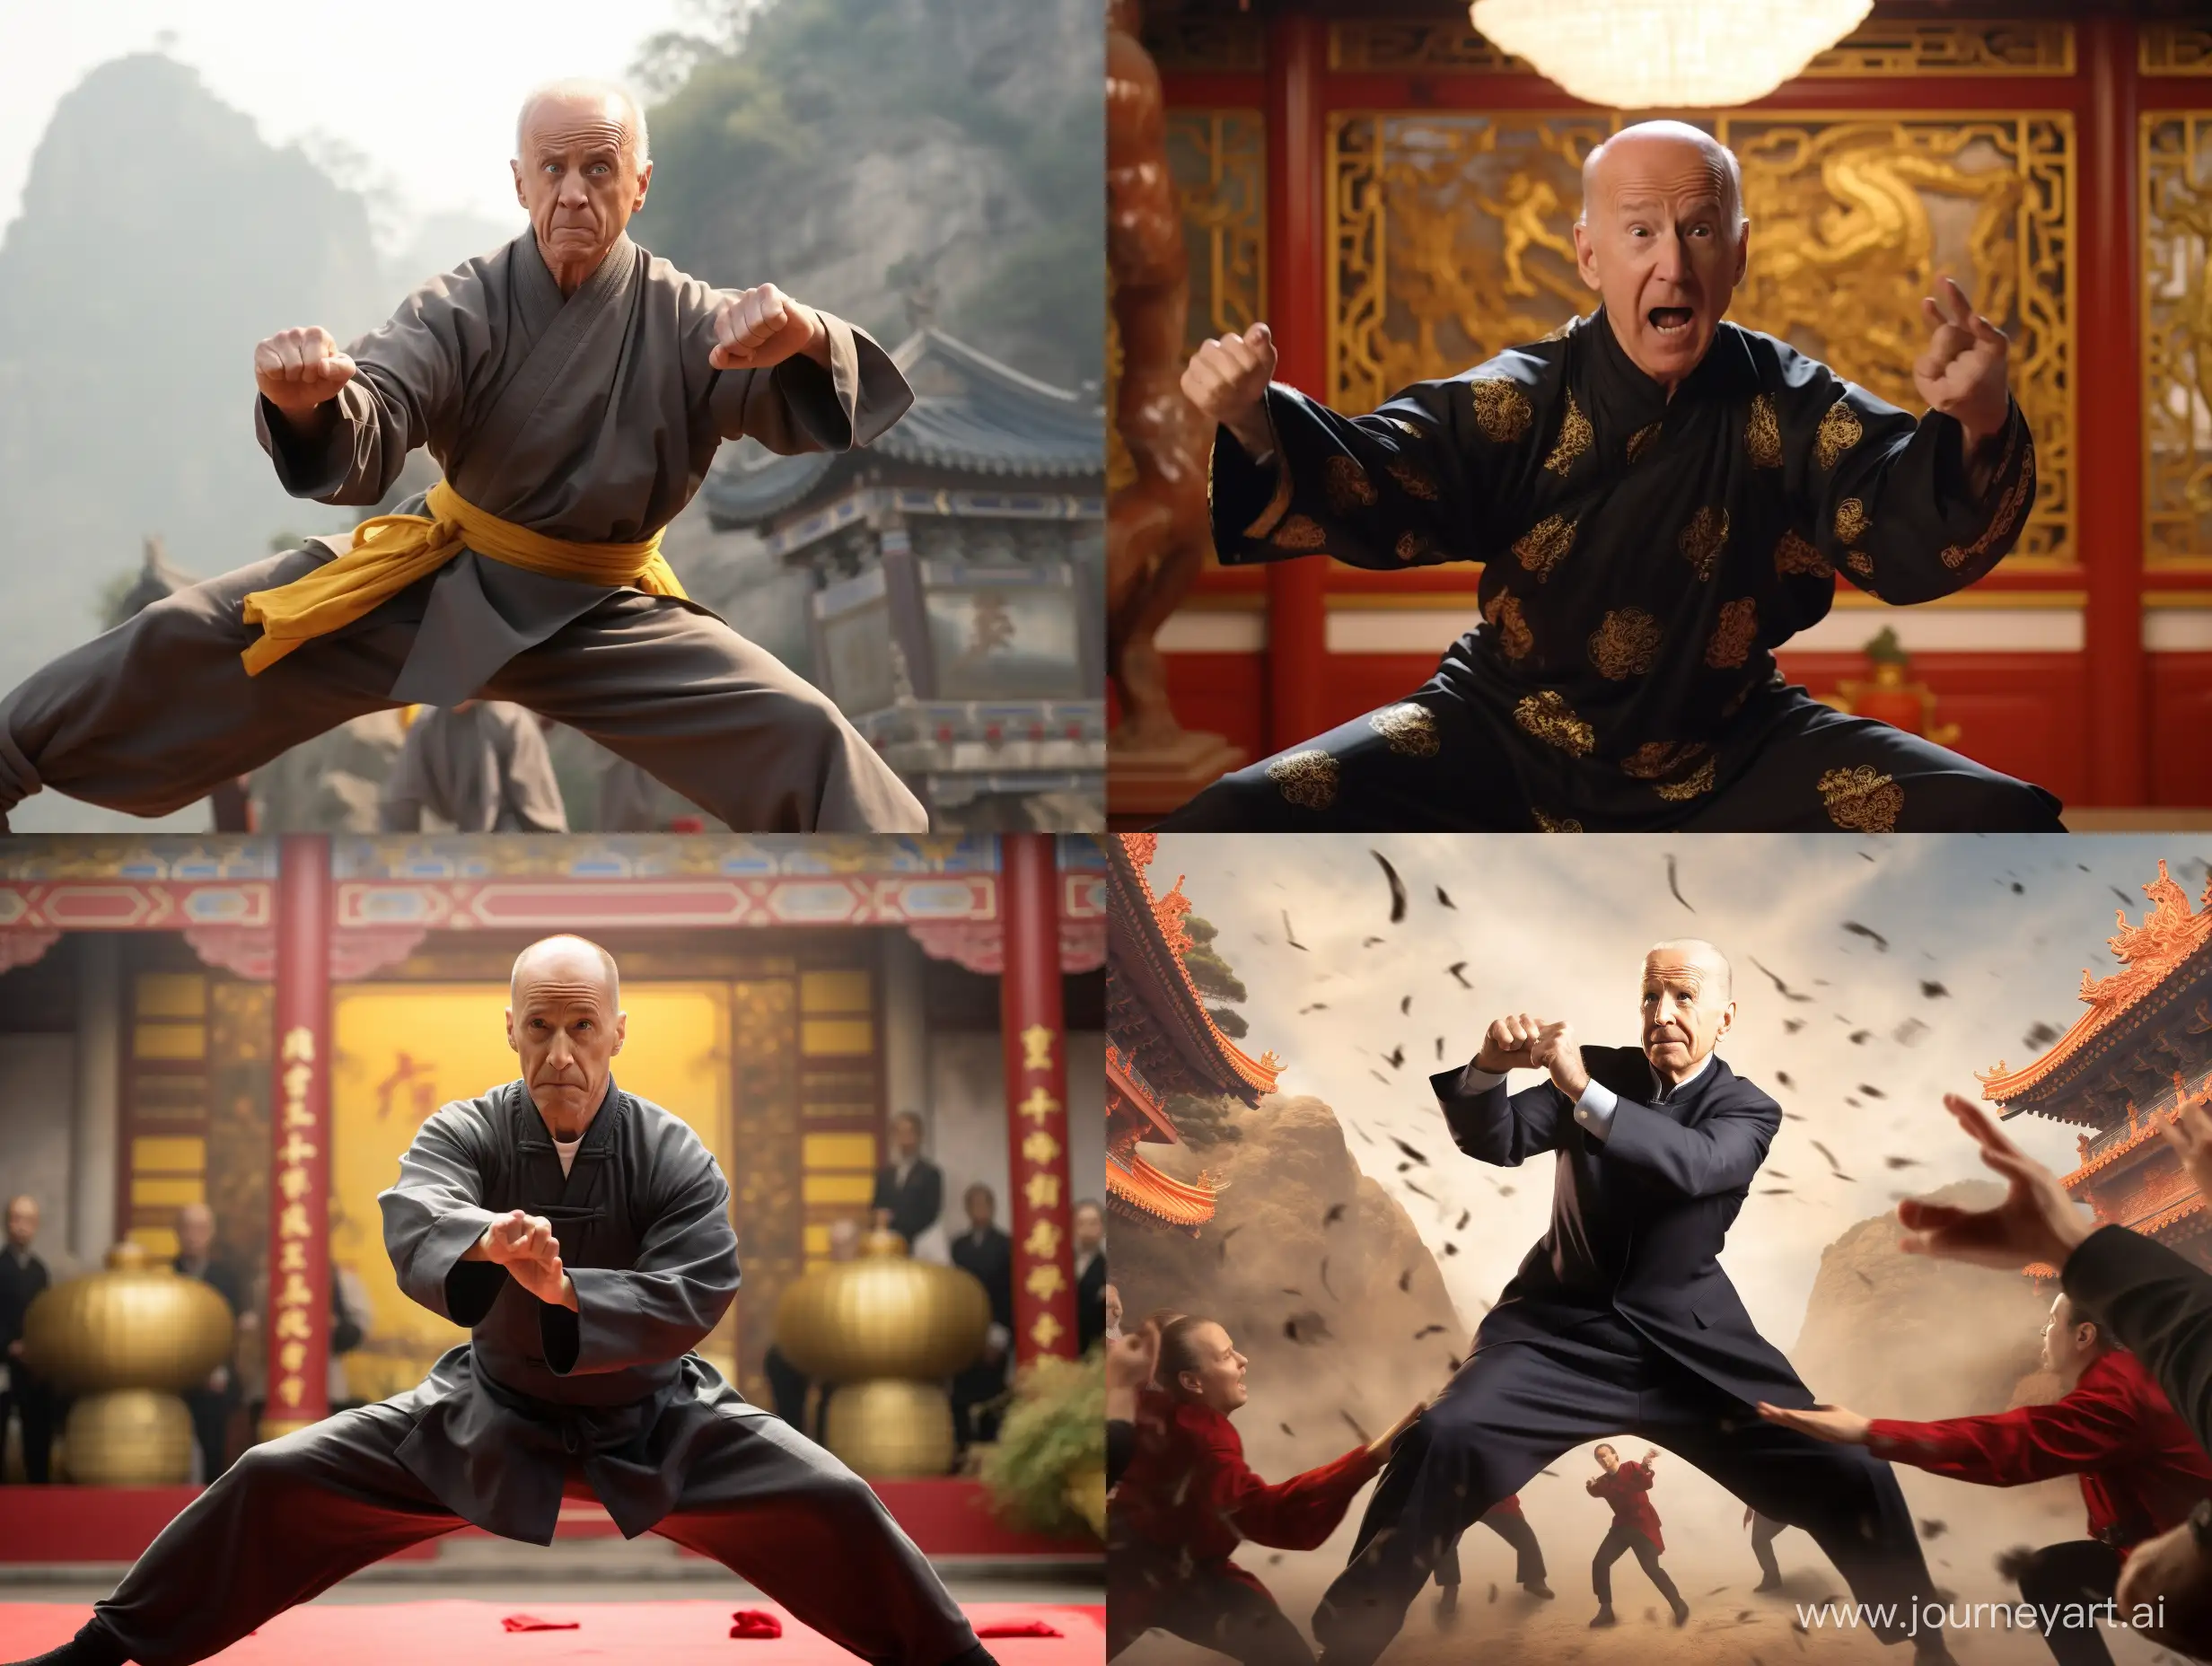 Joe-Biden-Engages-in-Kung-Fu-Martial-Arts-Display